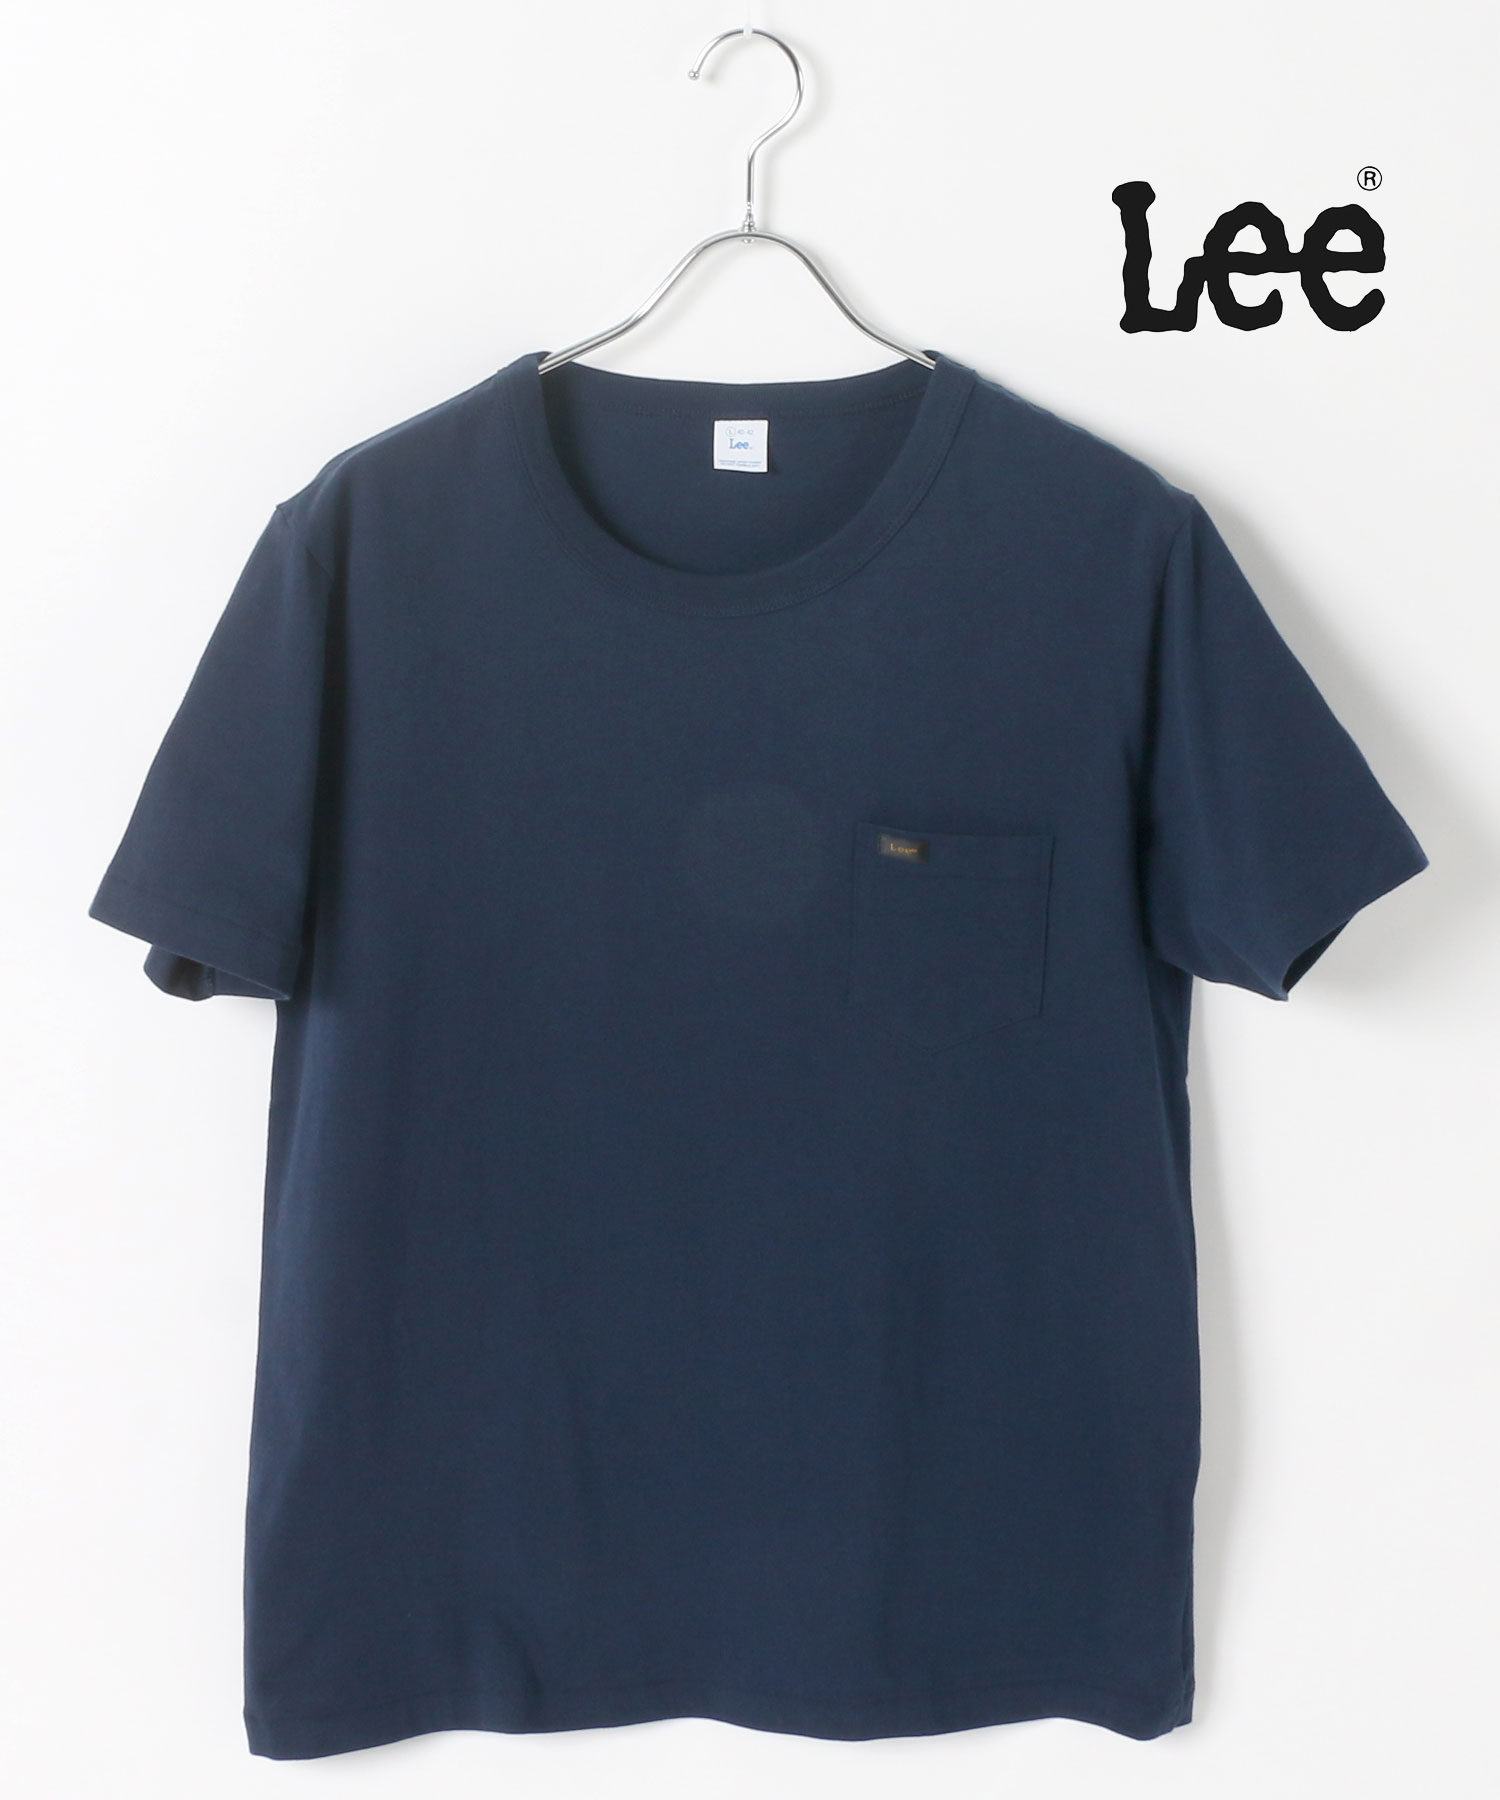 【Lee】リー 半袖ポケット付きTシャツ